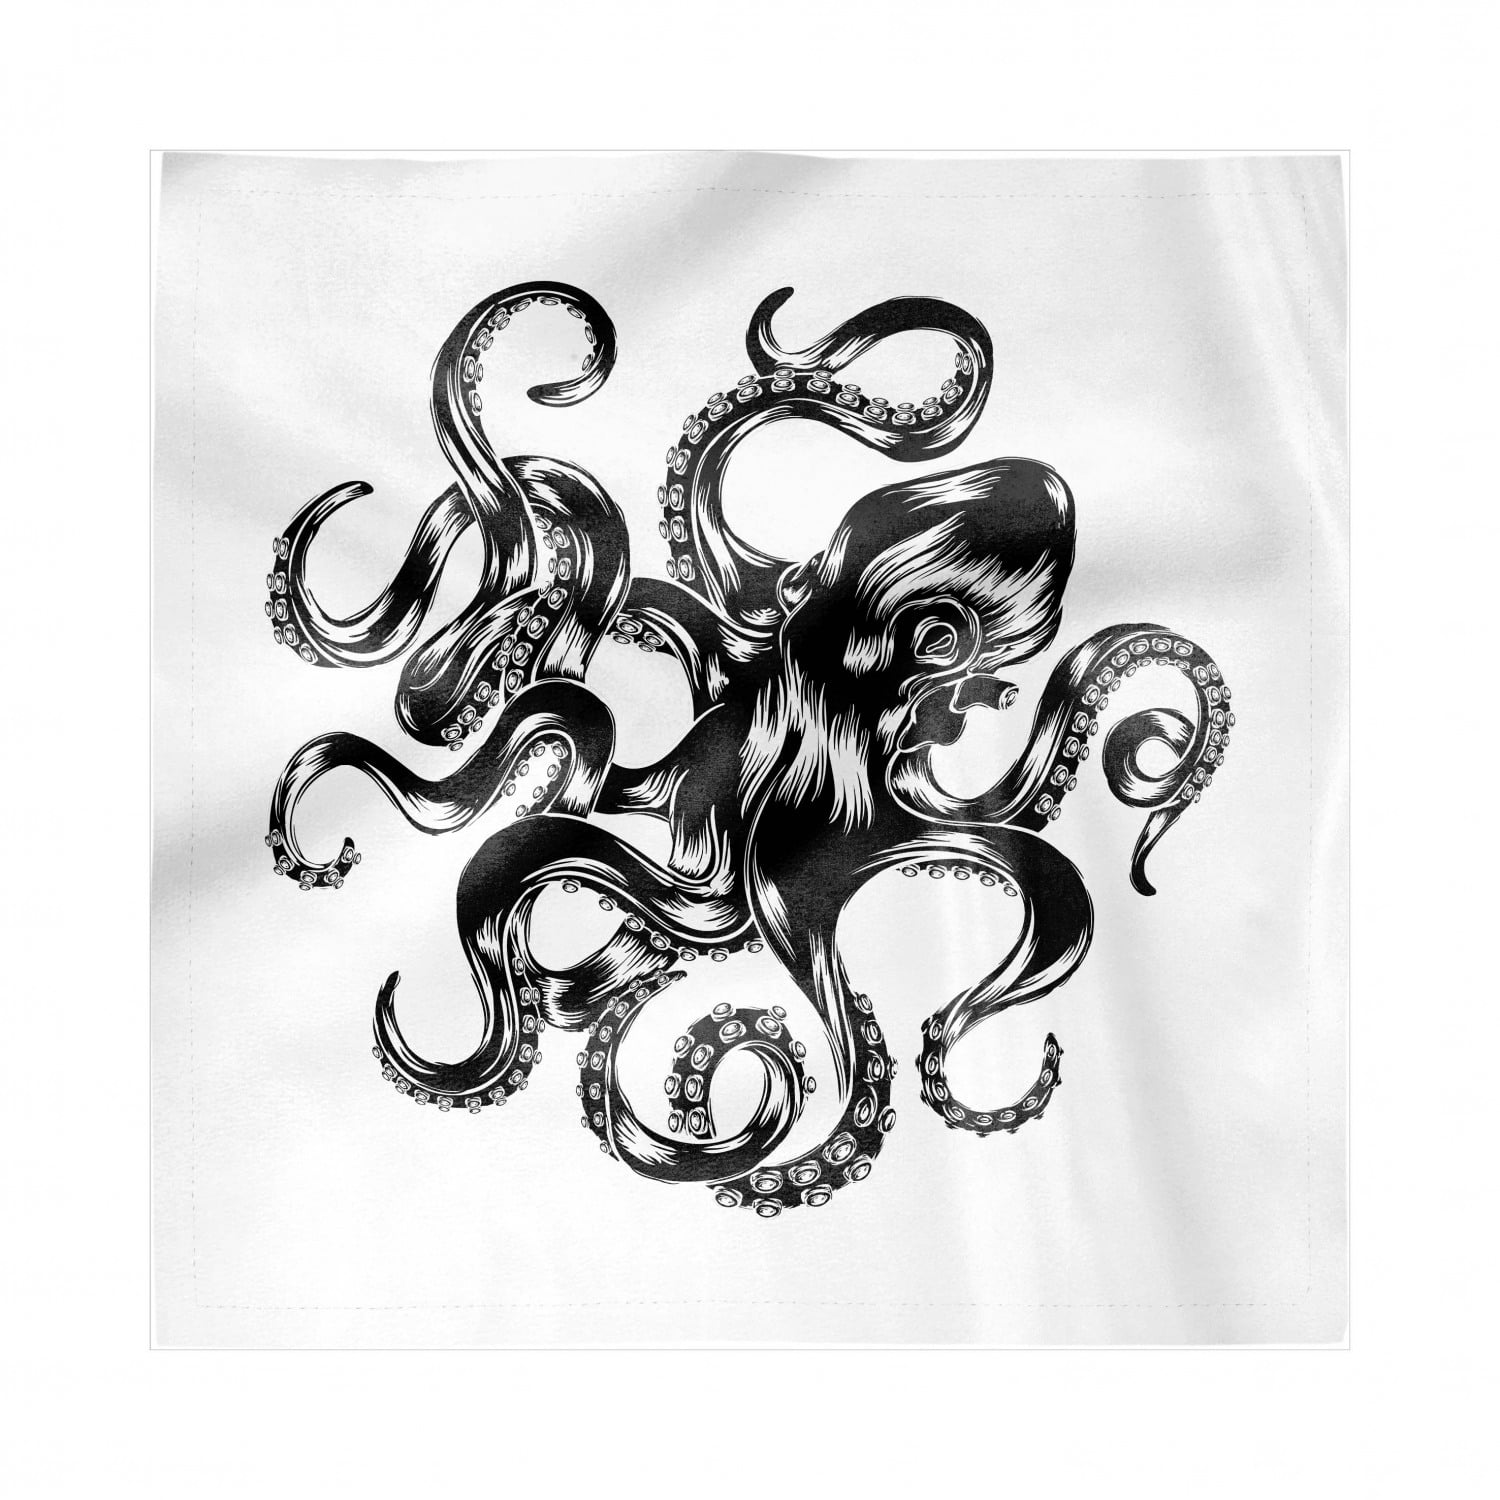 Multicolor 18x18 CJ Merch Octopus Diving Helmet Throw Pillow 